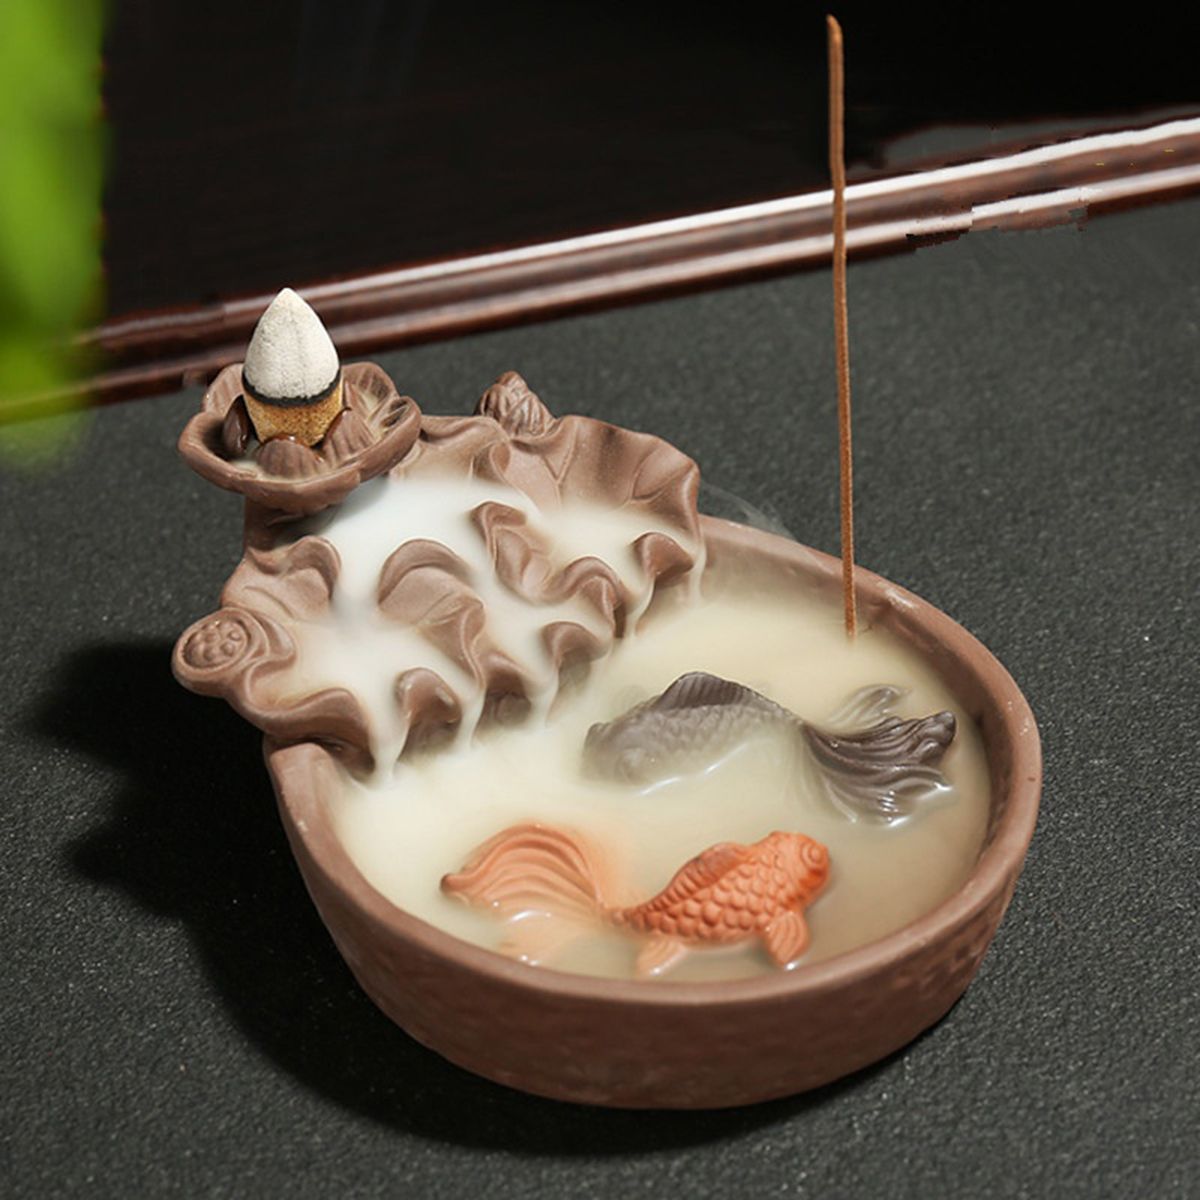 Porcelain-Backflow-Cone-Incense-Burner-Buddha-Ceramic-Buddhist-Sandalwood-Holder-Fish-Decor-1383931